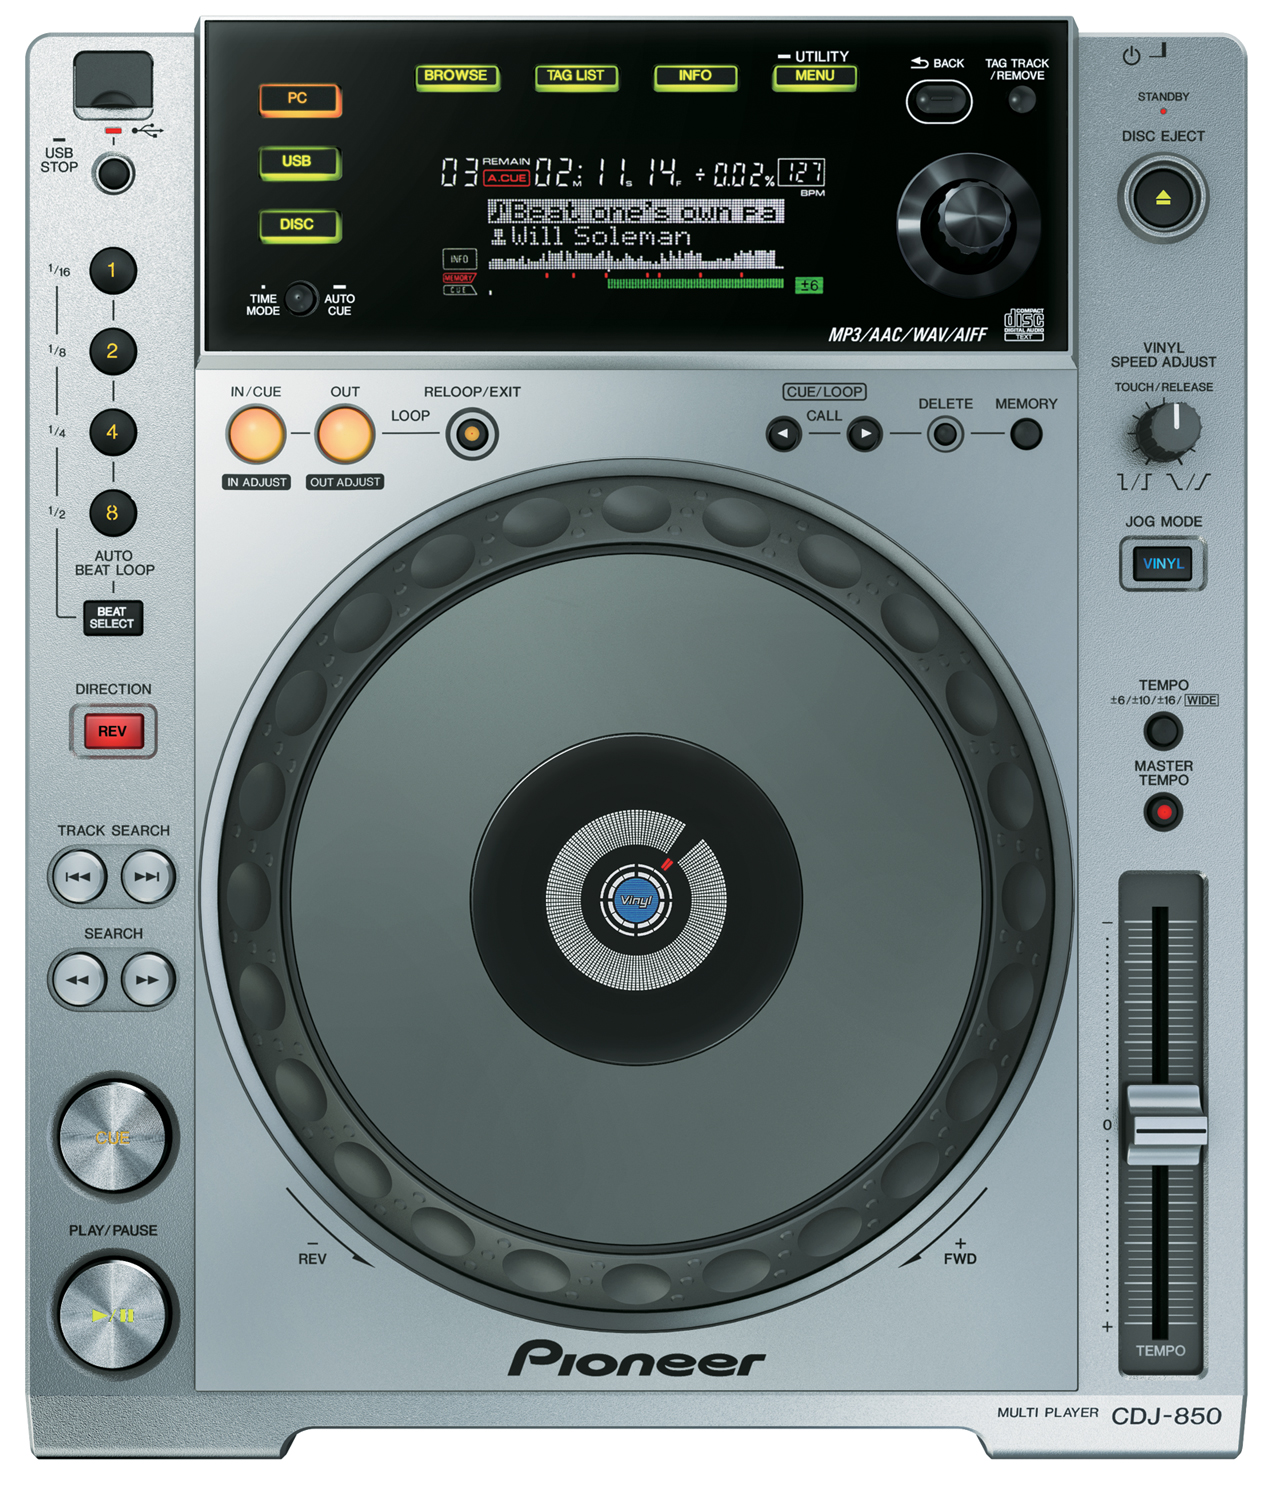 CDJ-850 - Pioneer CDJ-850 - Audiofanzine